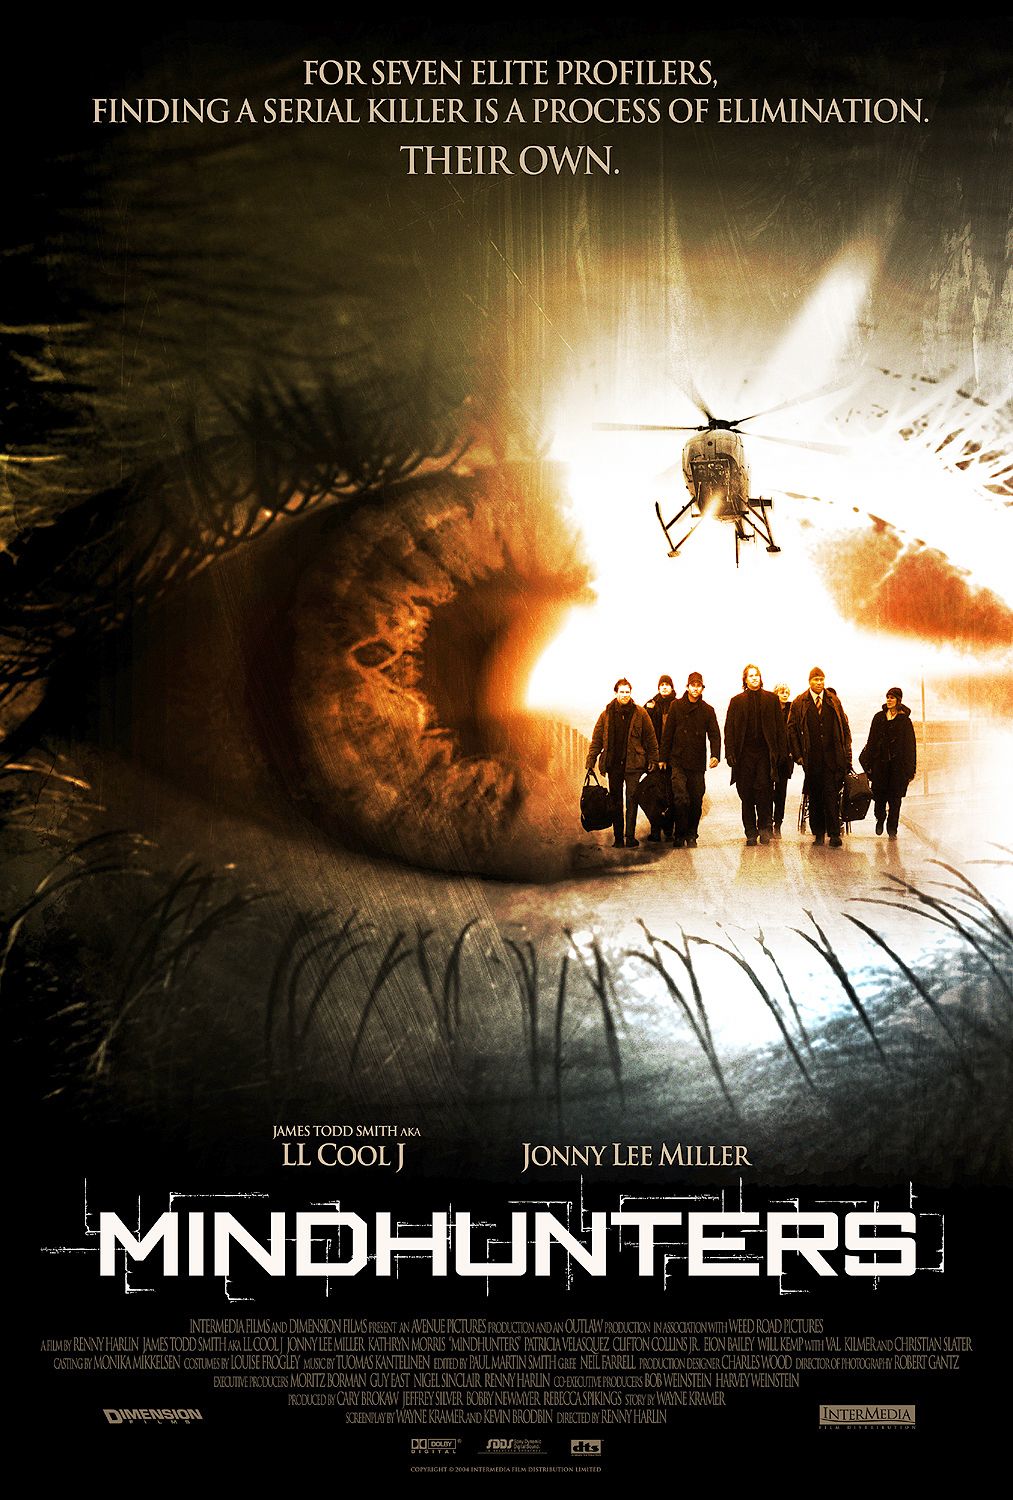 Mind Hunters (2004)dvdplanetstorepk